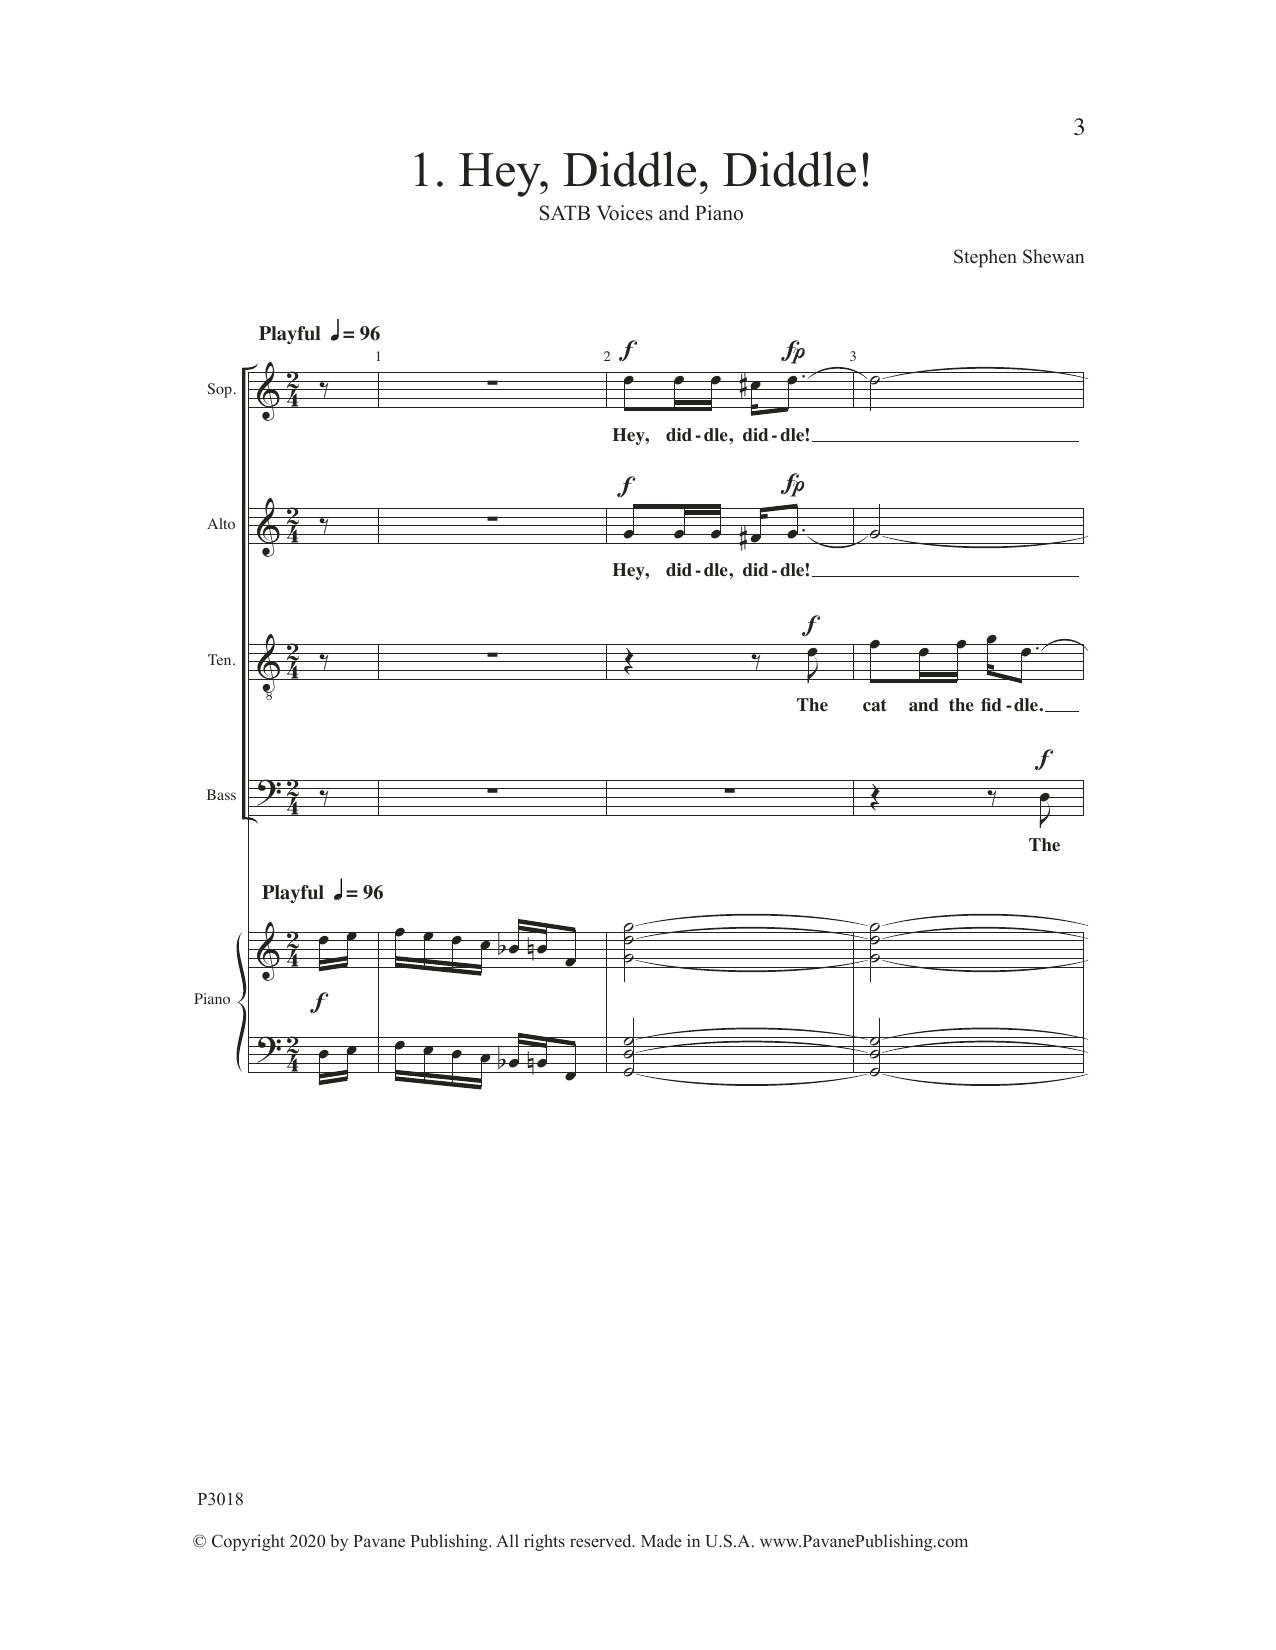 Stephen Shewan Mother Goose Gems Sheet Music Notes & Chords for SATB Choir - Download or Print PDF